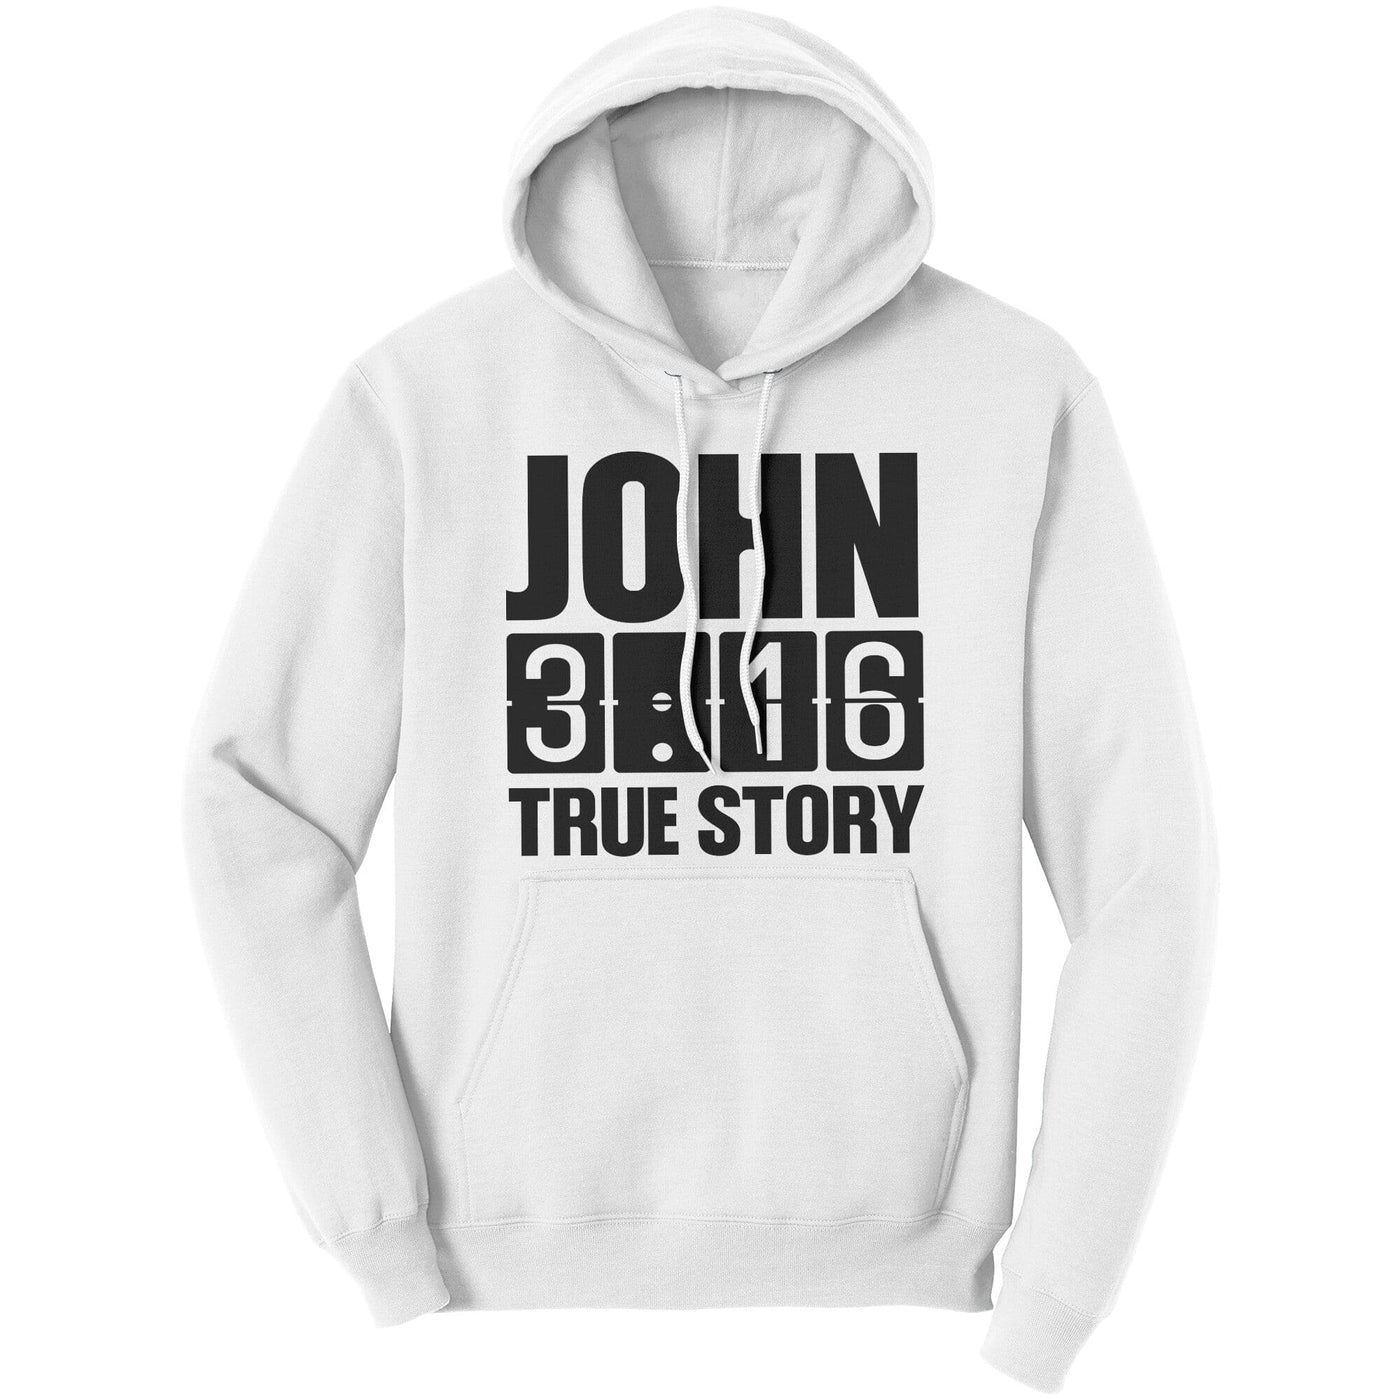 Graphic Hoodie Sweatshirt John 3:16 True Story Hooded Shirt - Unisex | Hoodies